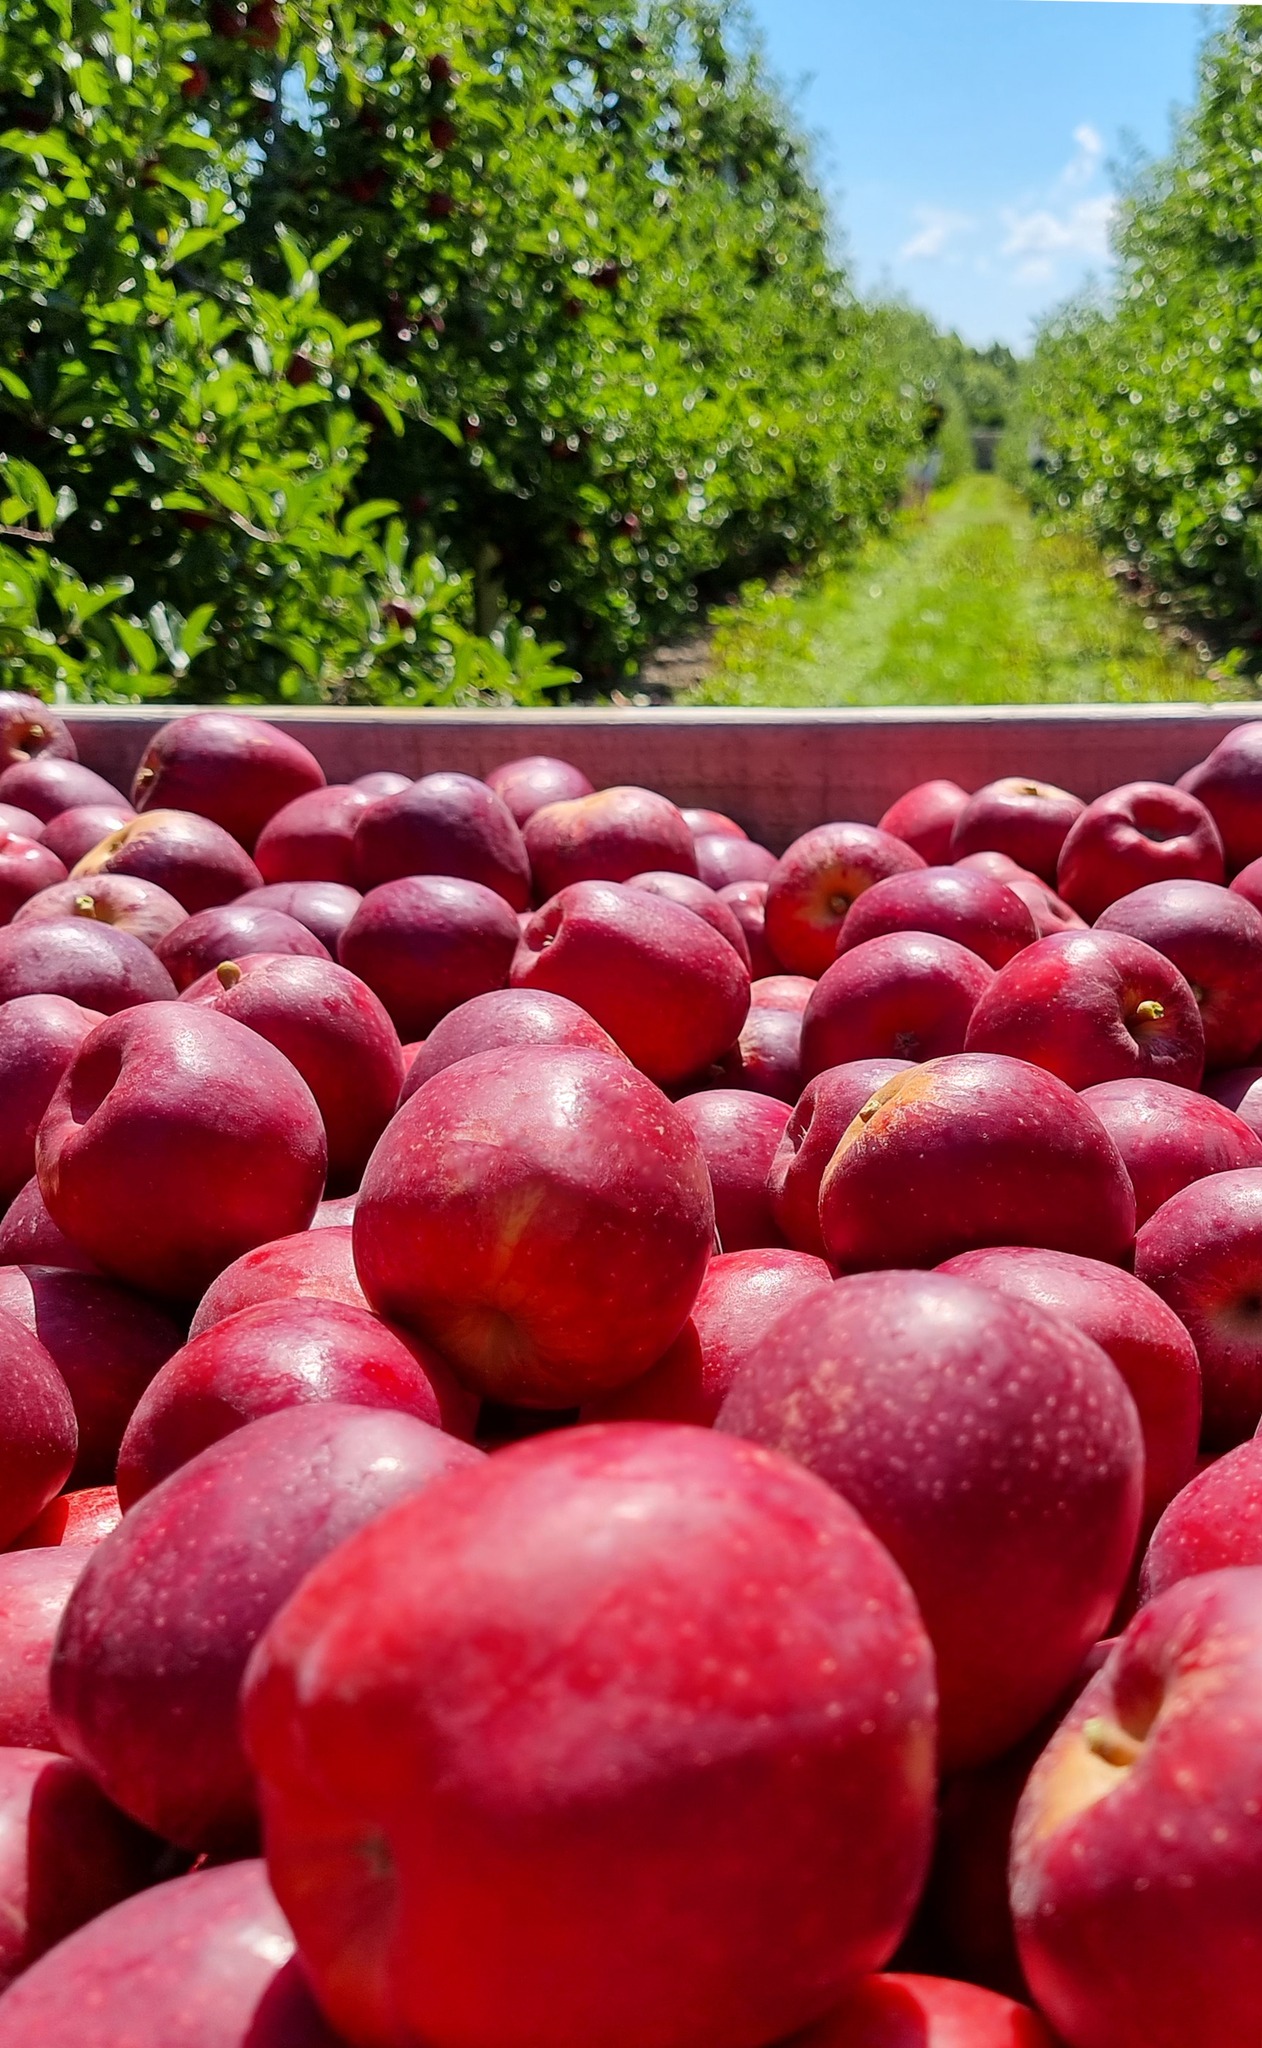 NZ apple exports plummet by 21%  